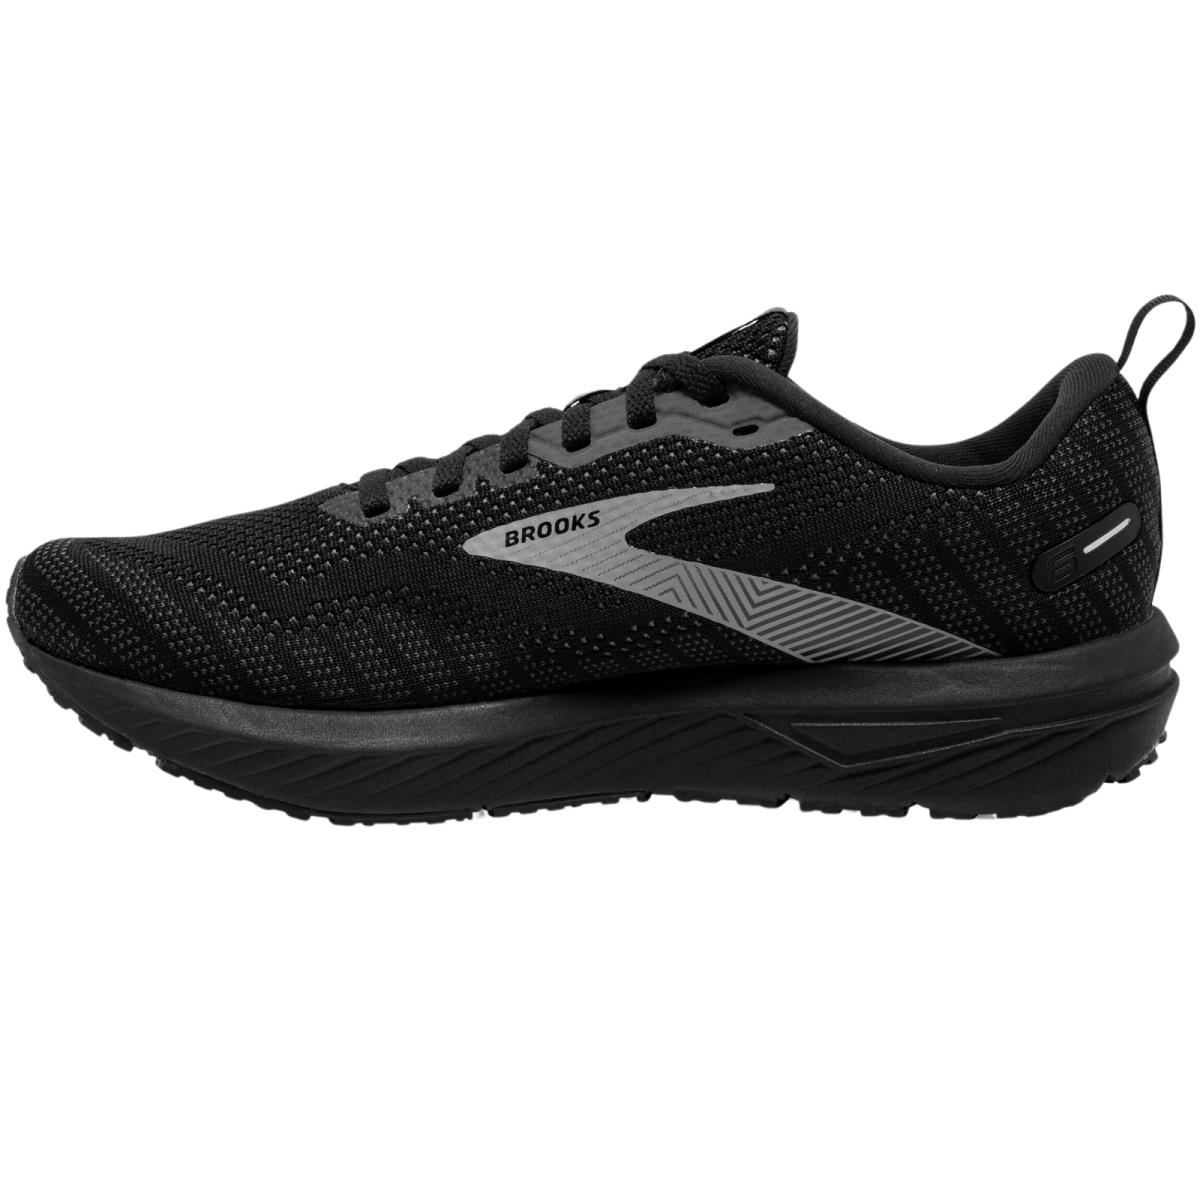 Brooks Revel 6 Men`s Running Shoes All Colors US Sizes 7-14 - Black/Blackened Pearl/Grey